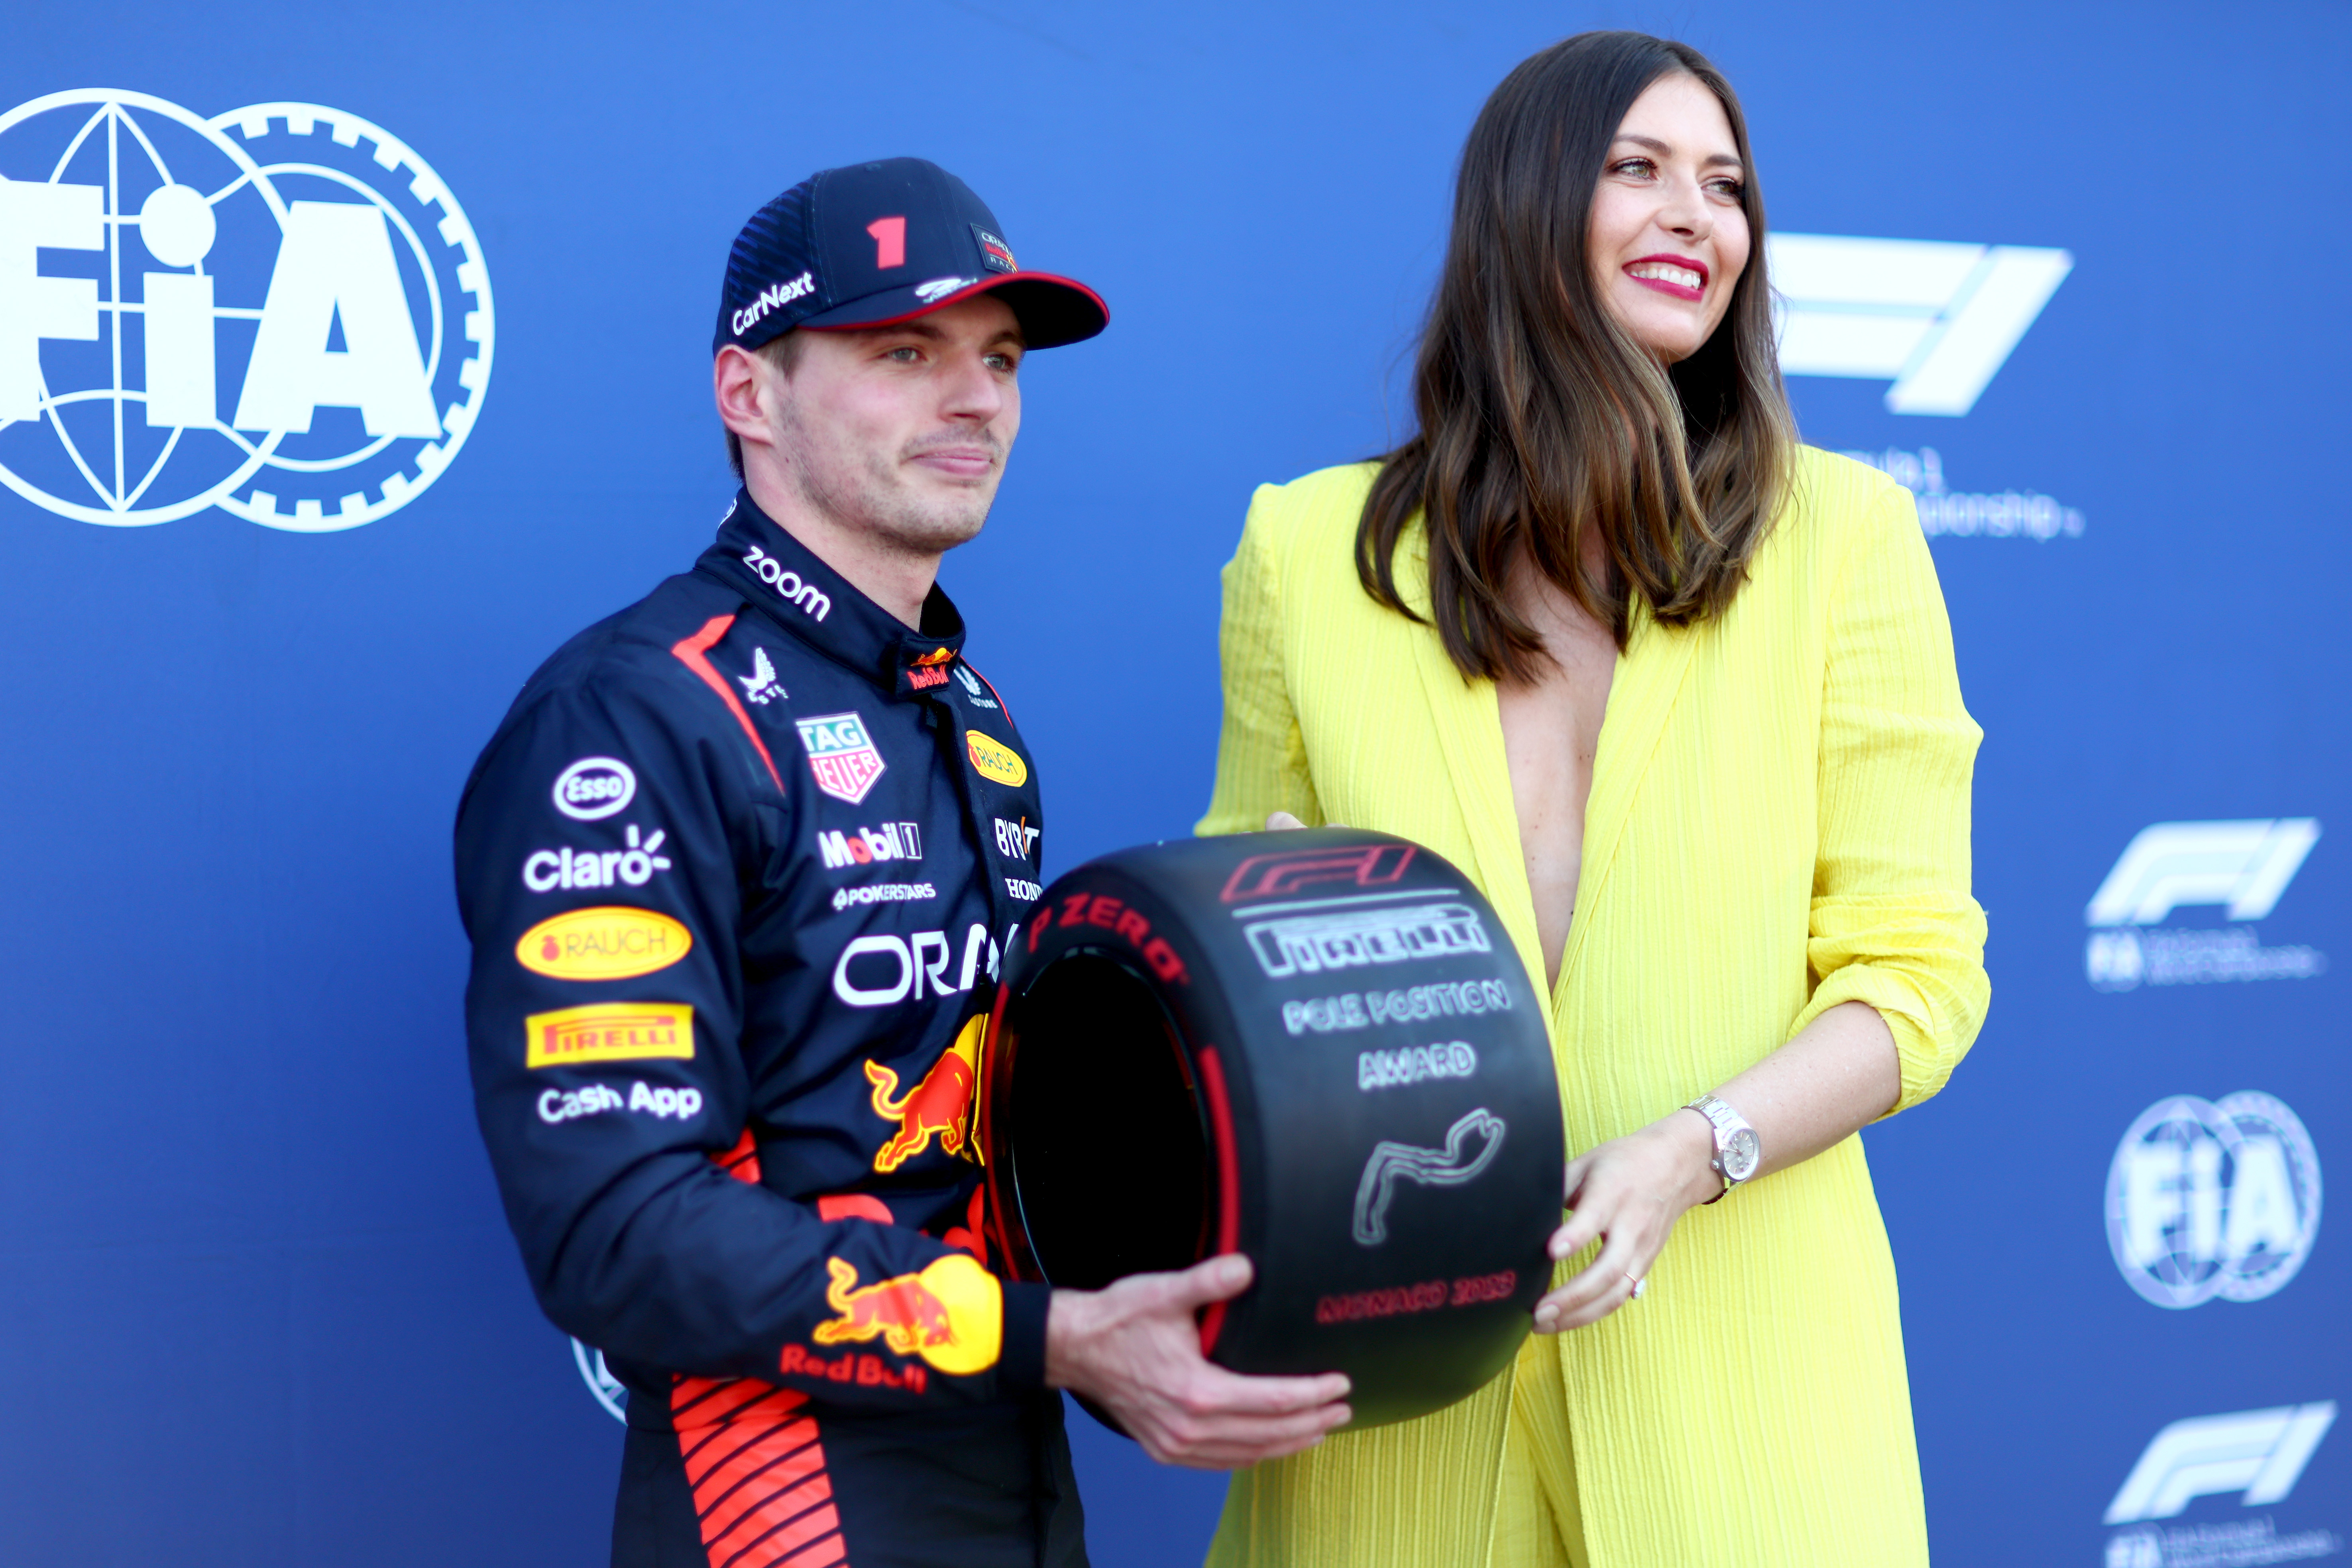 Sharapova was recently seen at the Monaco Grand Prix alongside Max Verstappen